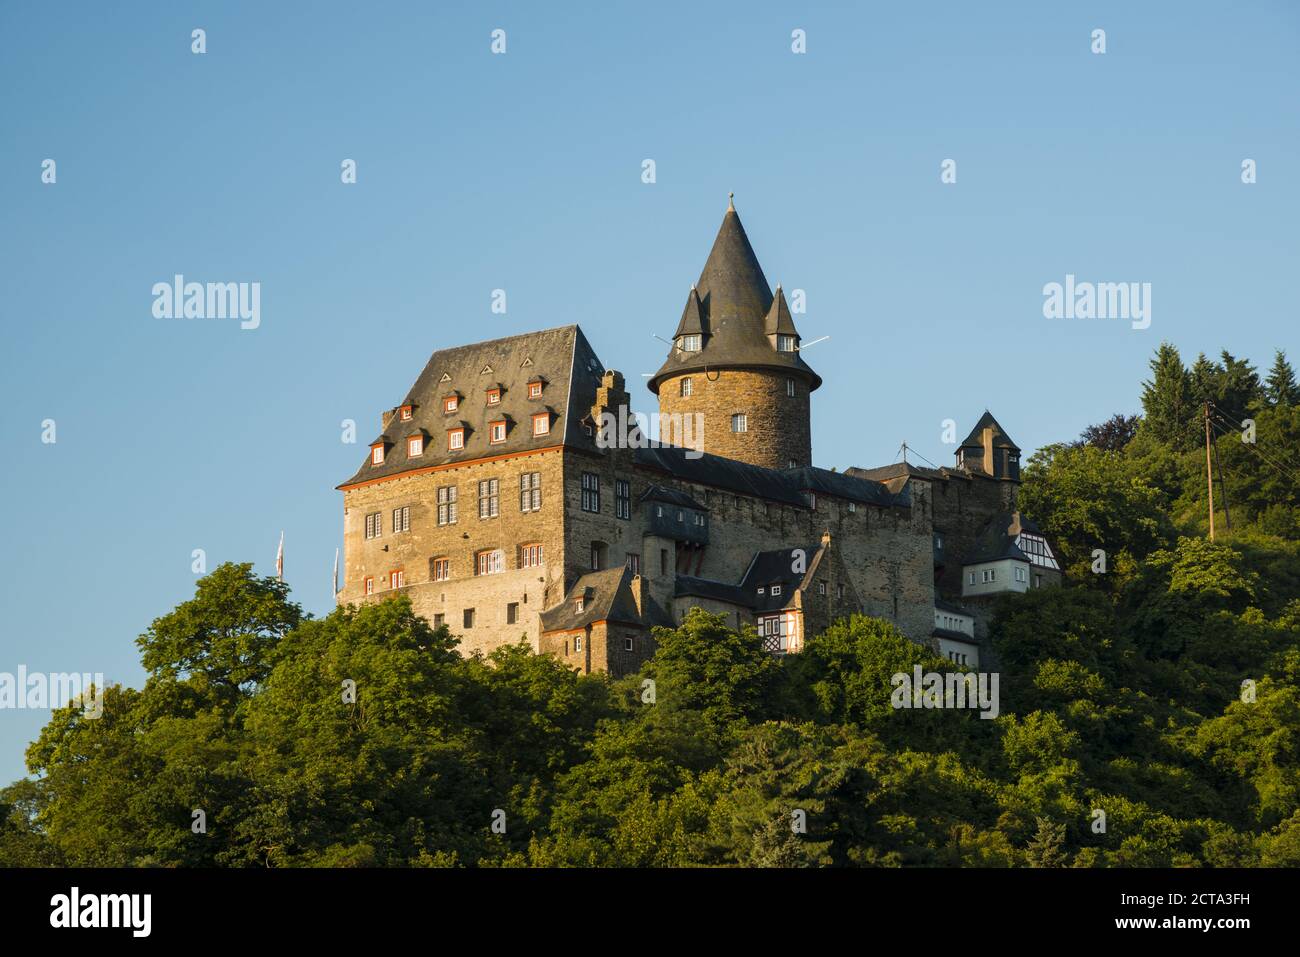 Germany, Rhineland Palatinate, Bacharach, Stahleck Castle, Upper Middle Rhine Valley Stock Photo